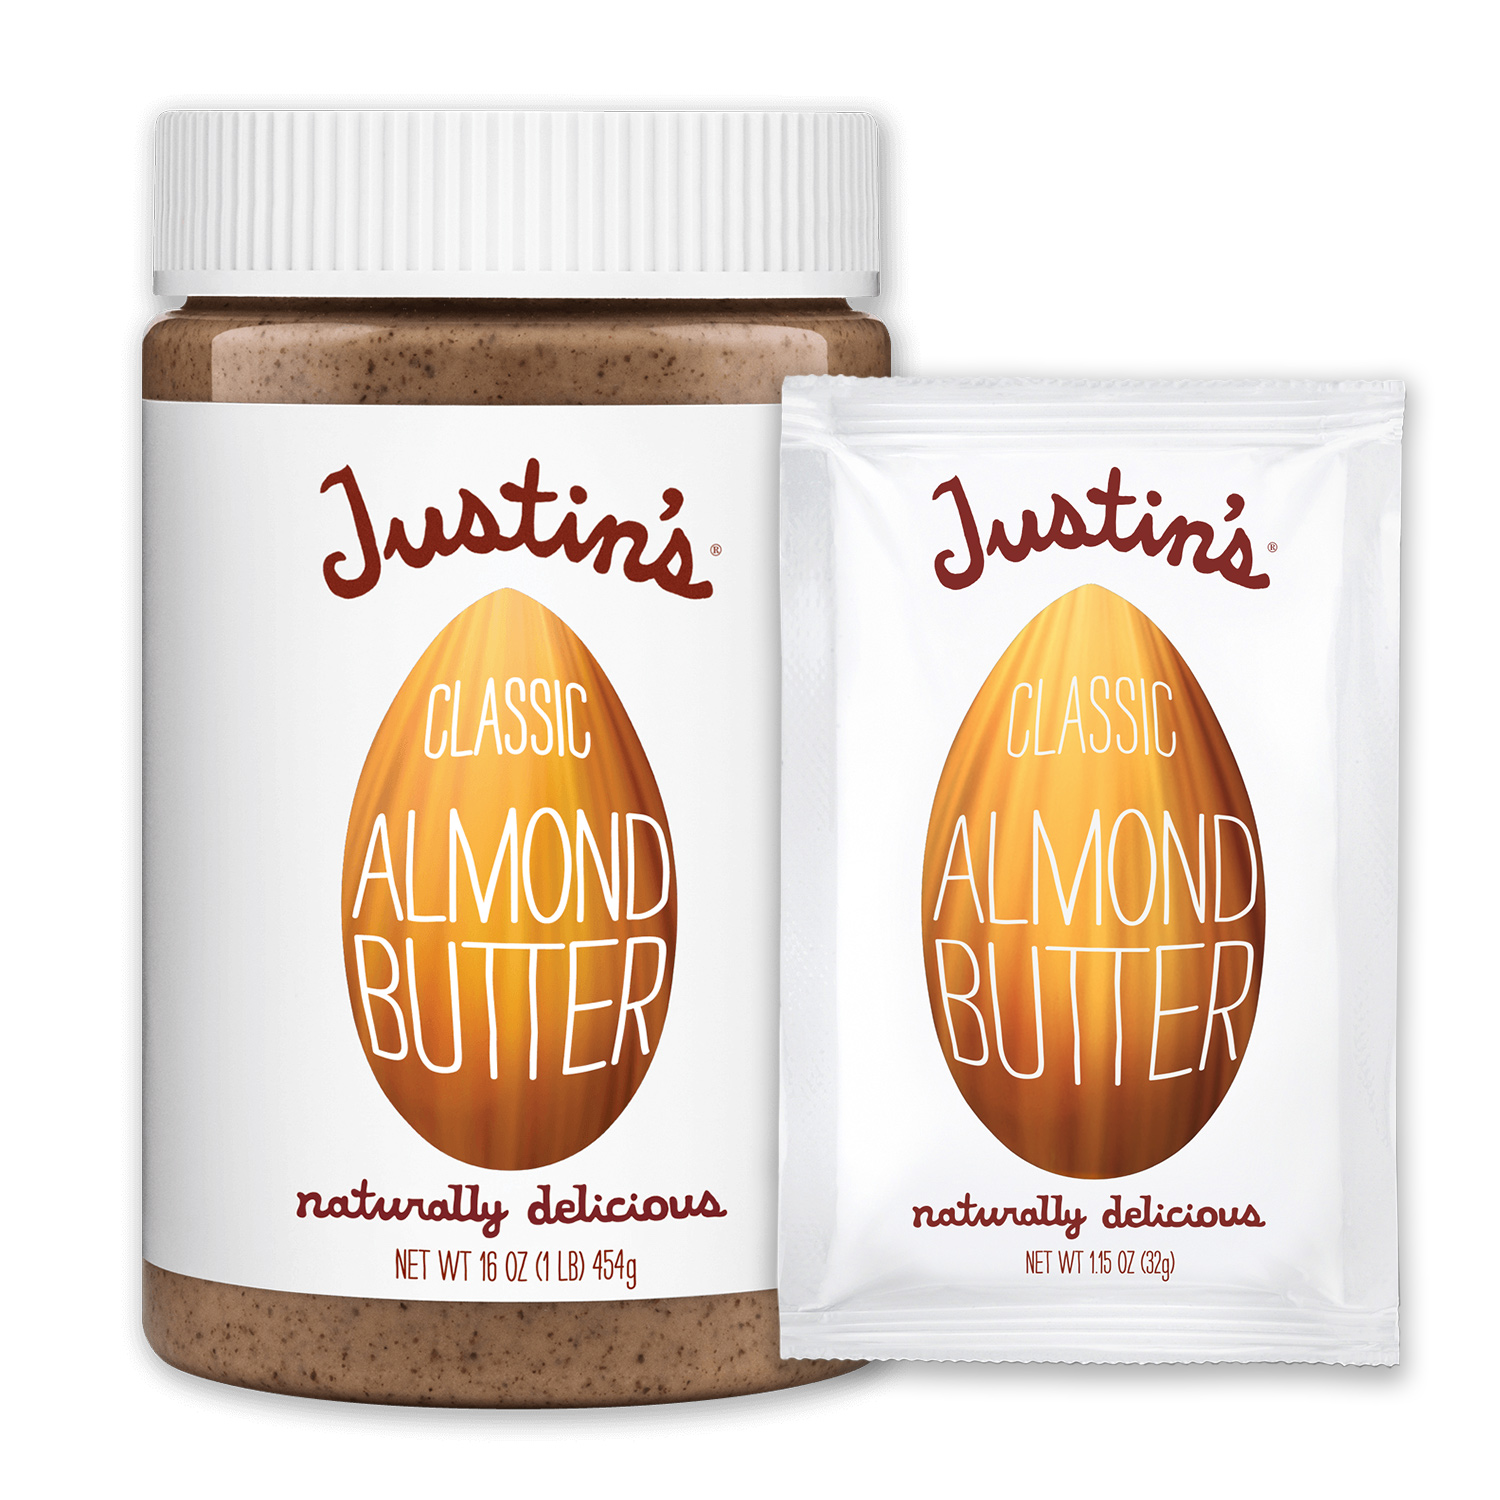 Justin's Classic Almond Butter Spread jar 16 oz. beside Justin's Classic Almond Butter Spread Squeeze Pack 1.15 oz.